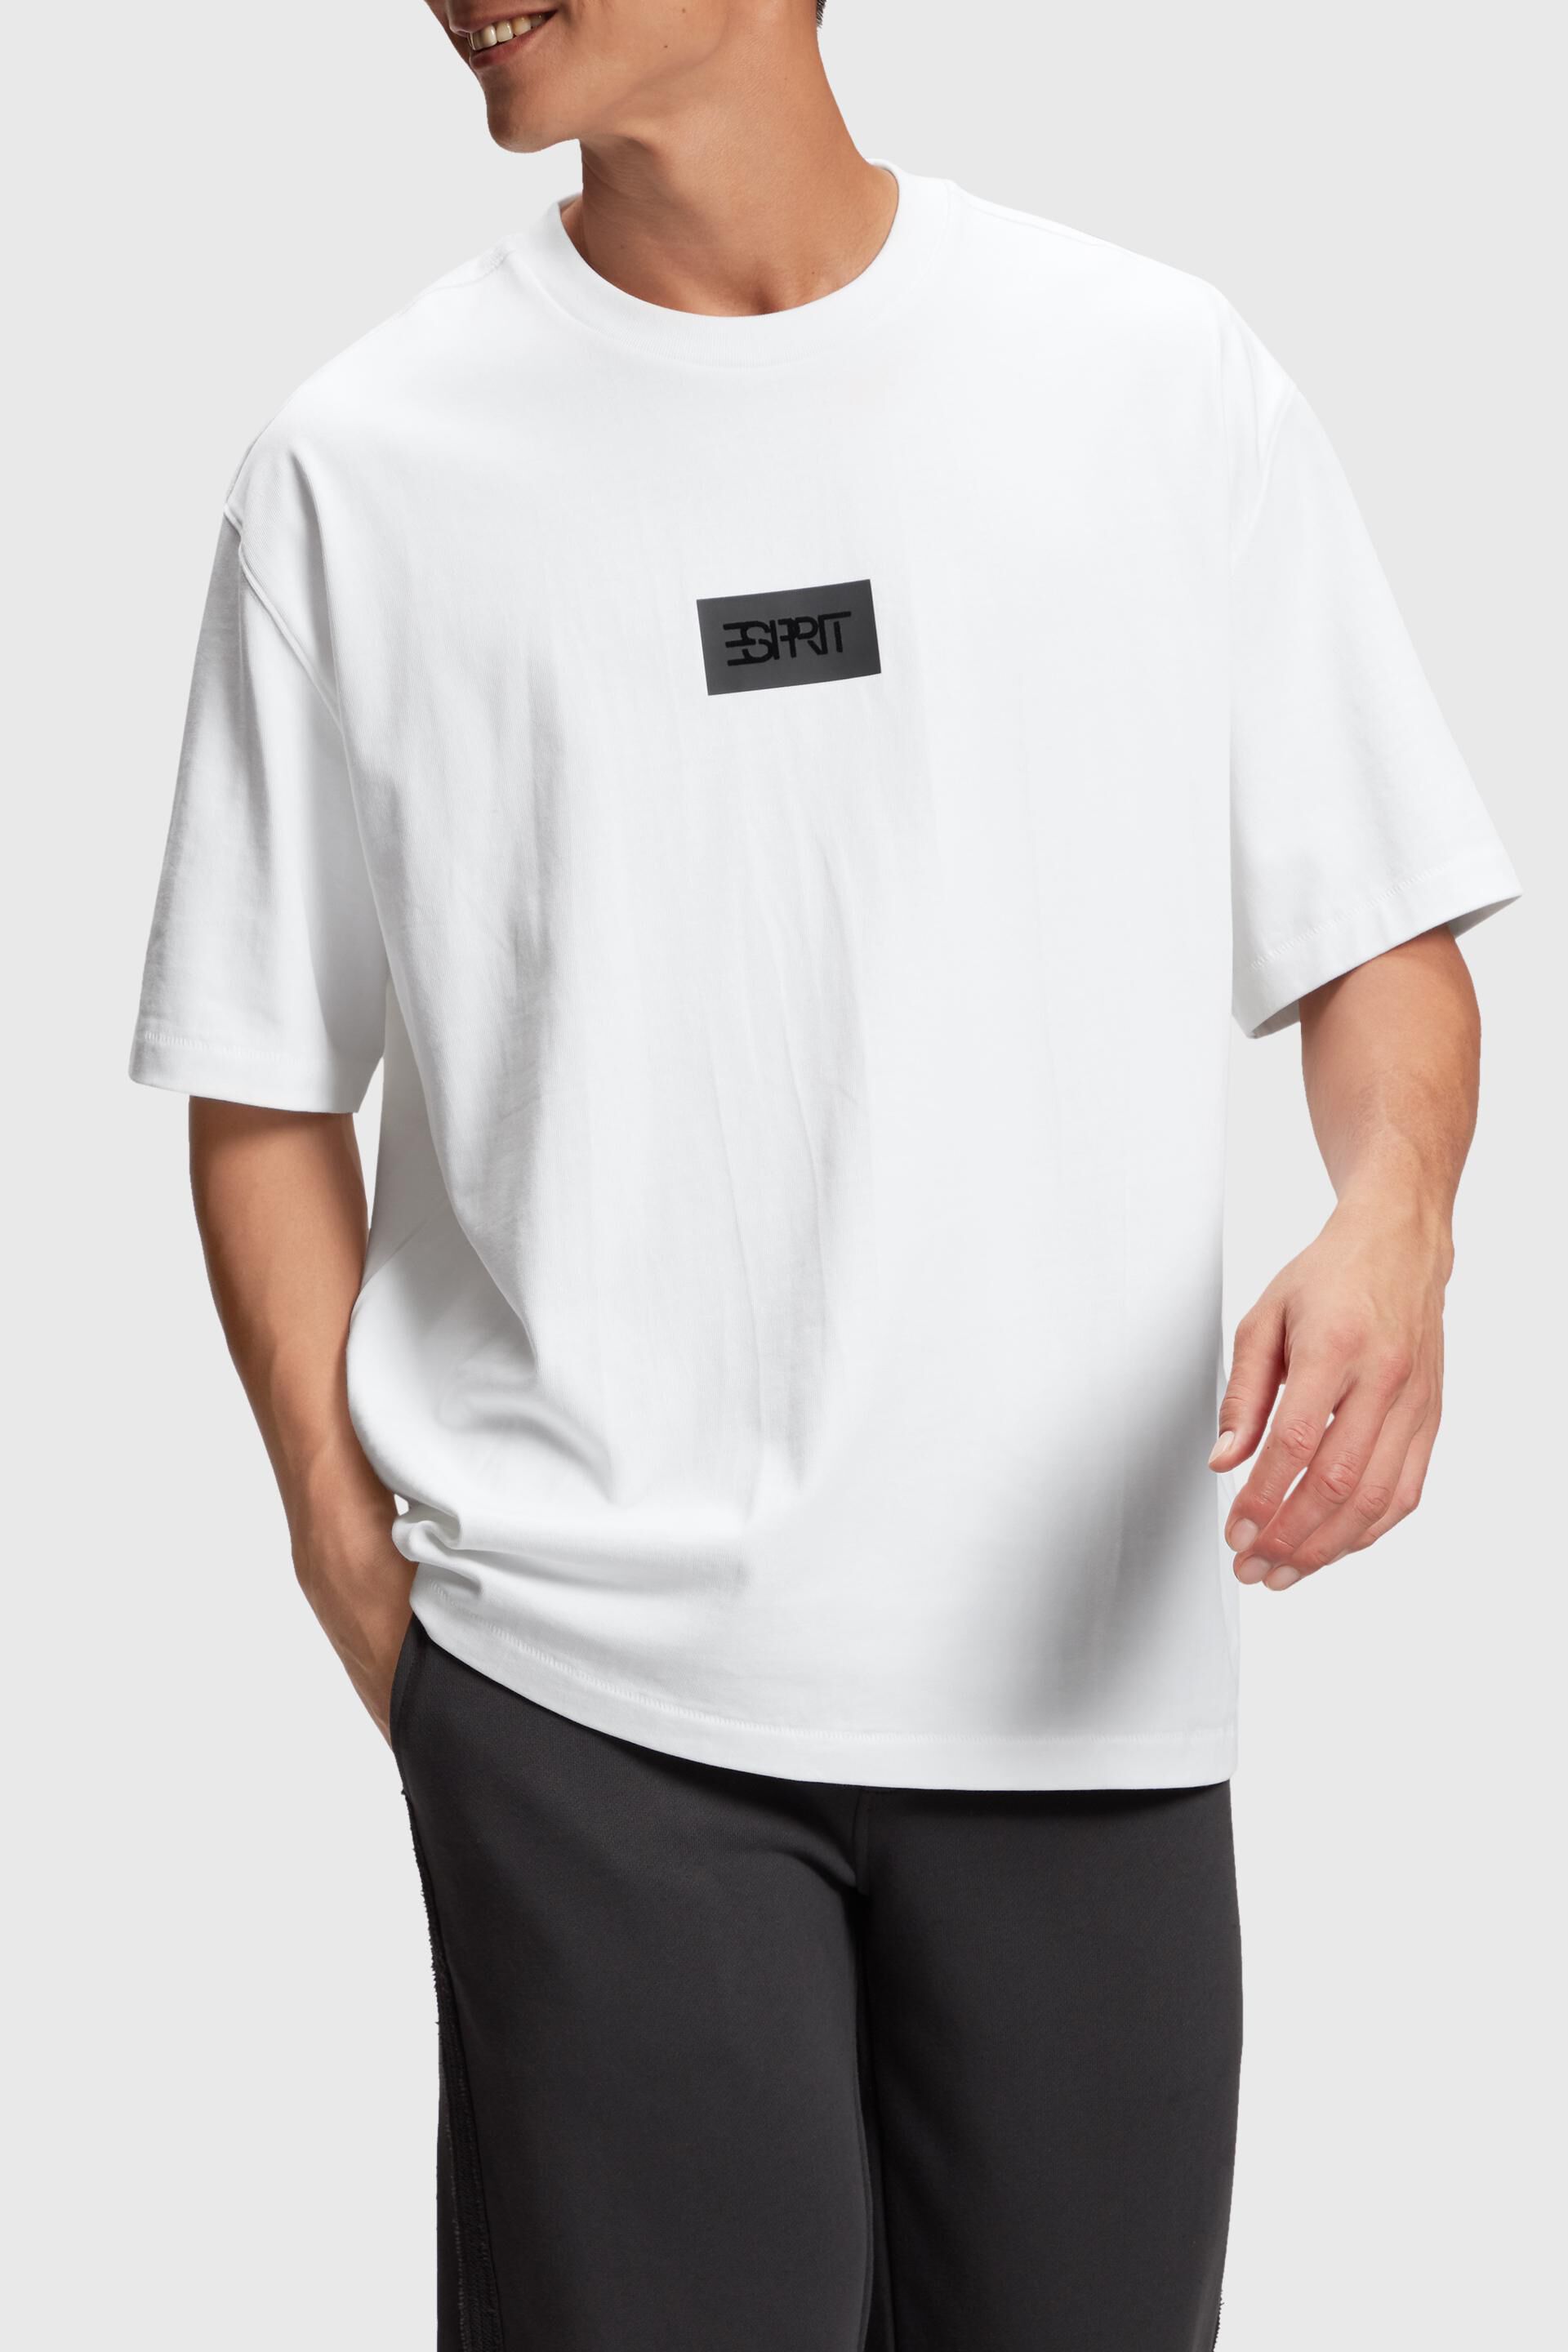 Esprit fit Boxy t-shirt